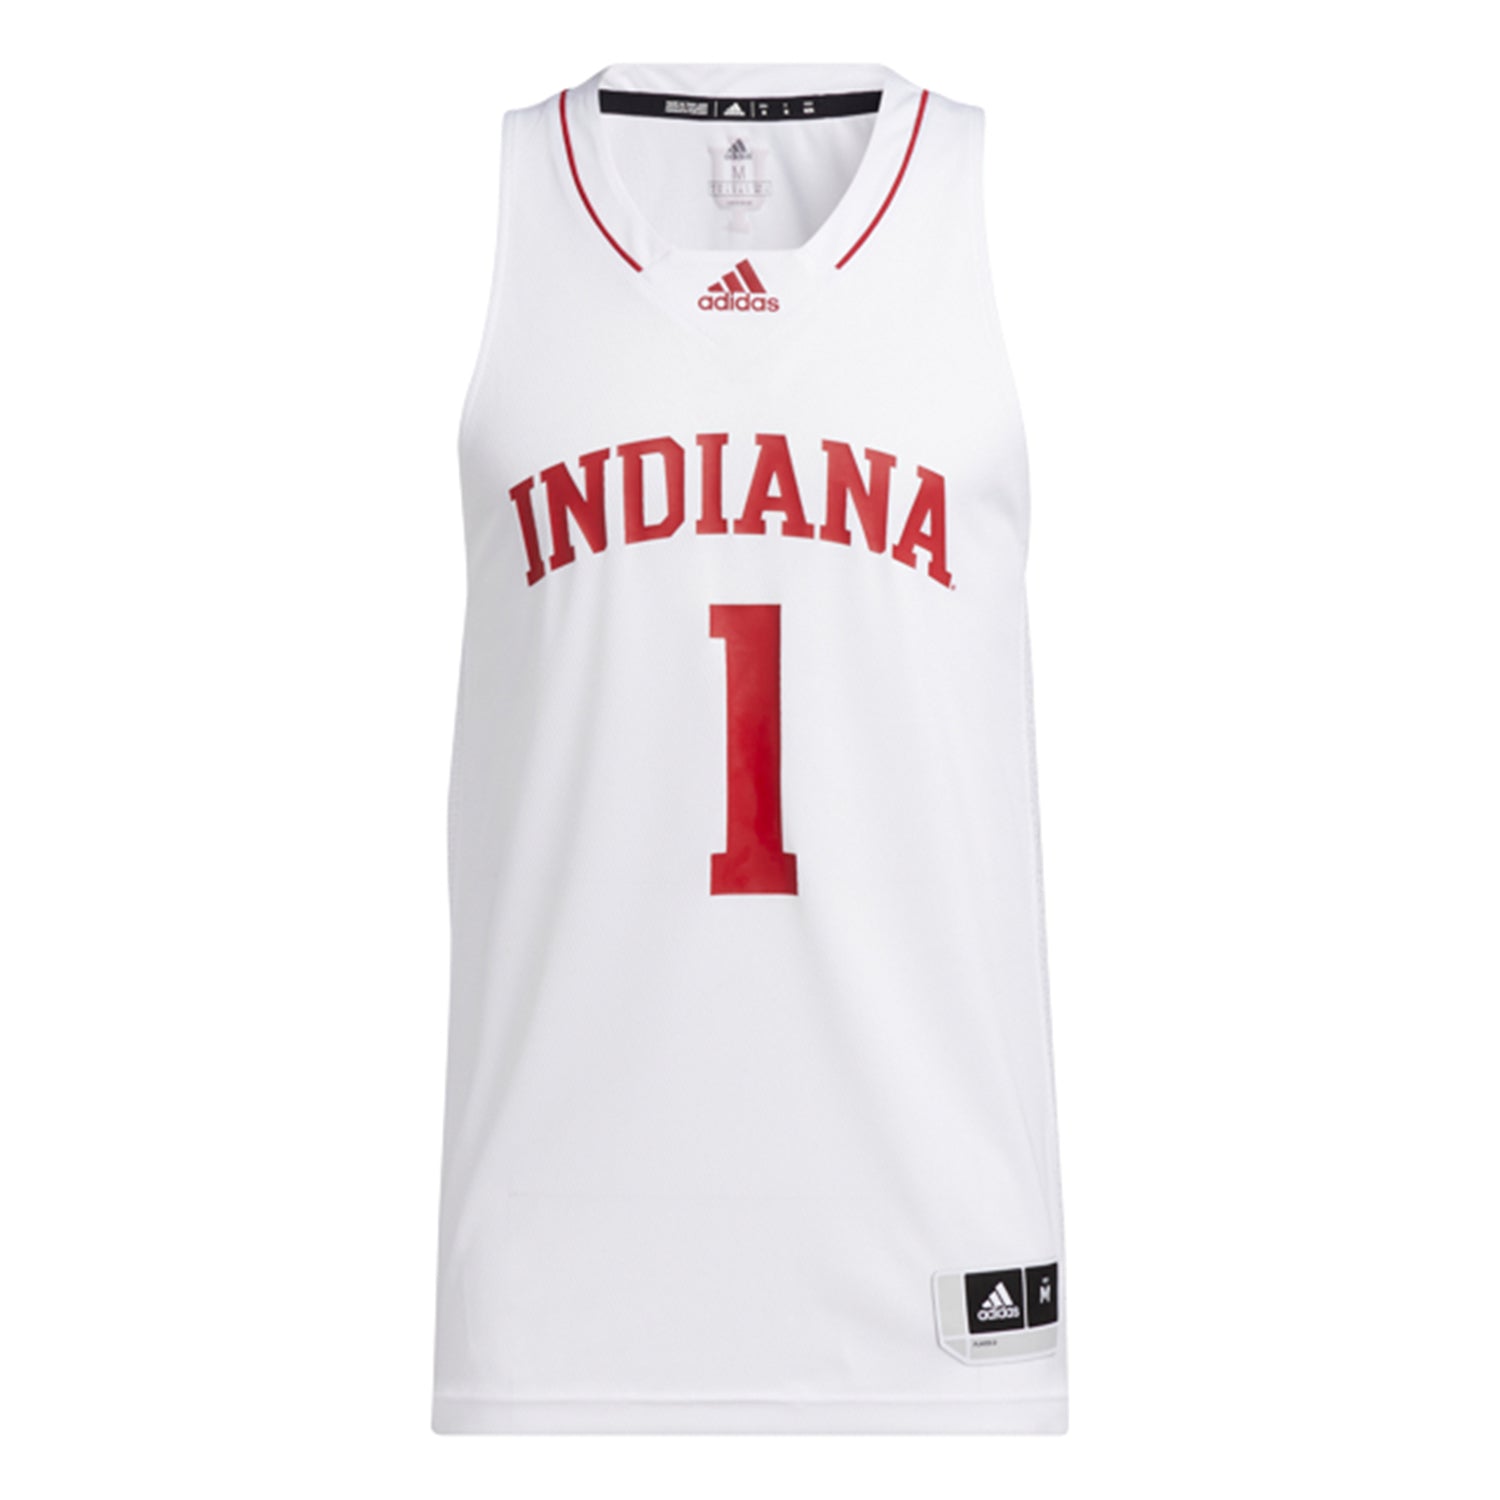 ADIDAS White Men's Basketball Replica #4 Indiana Jersey